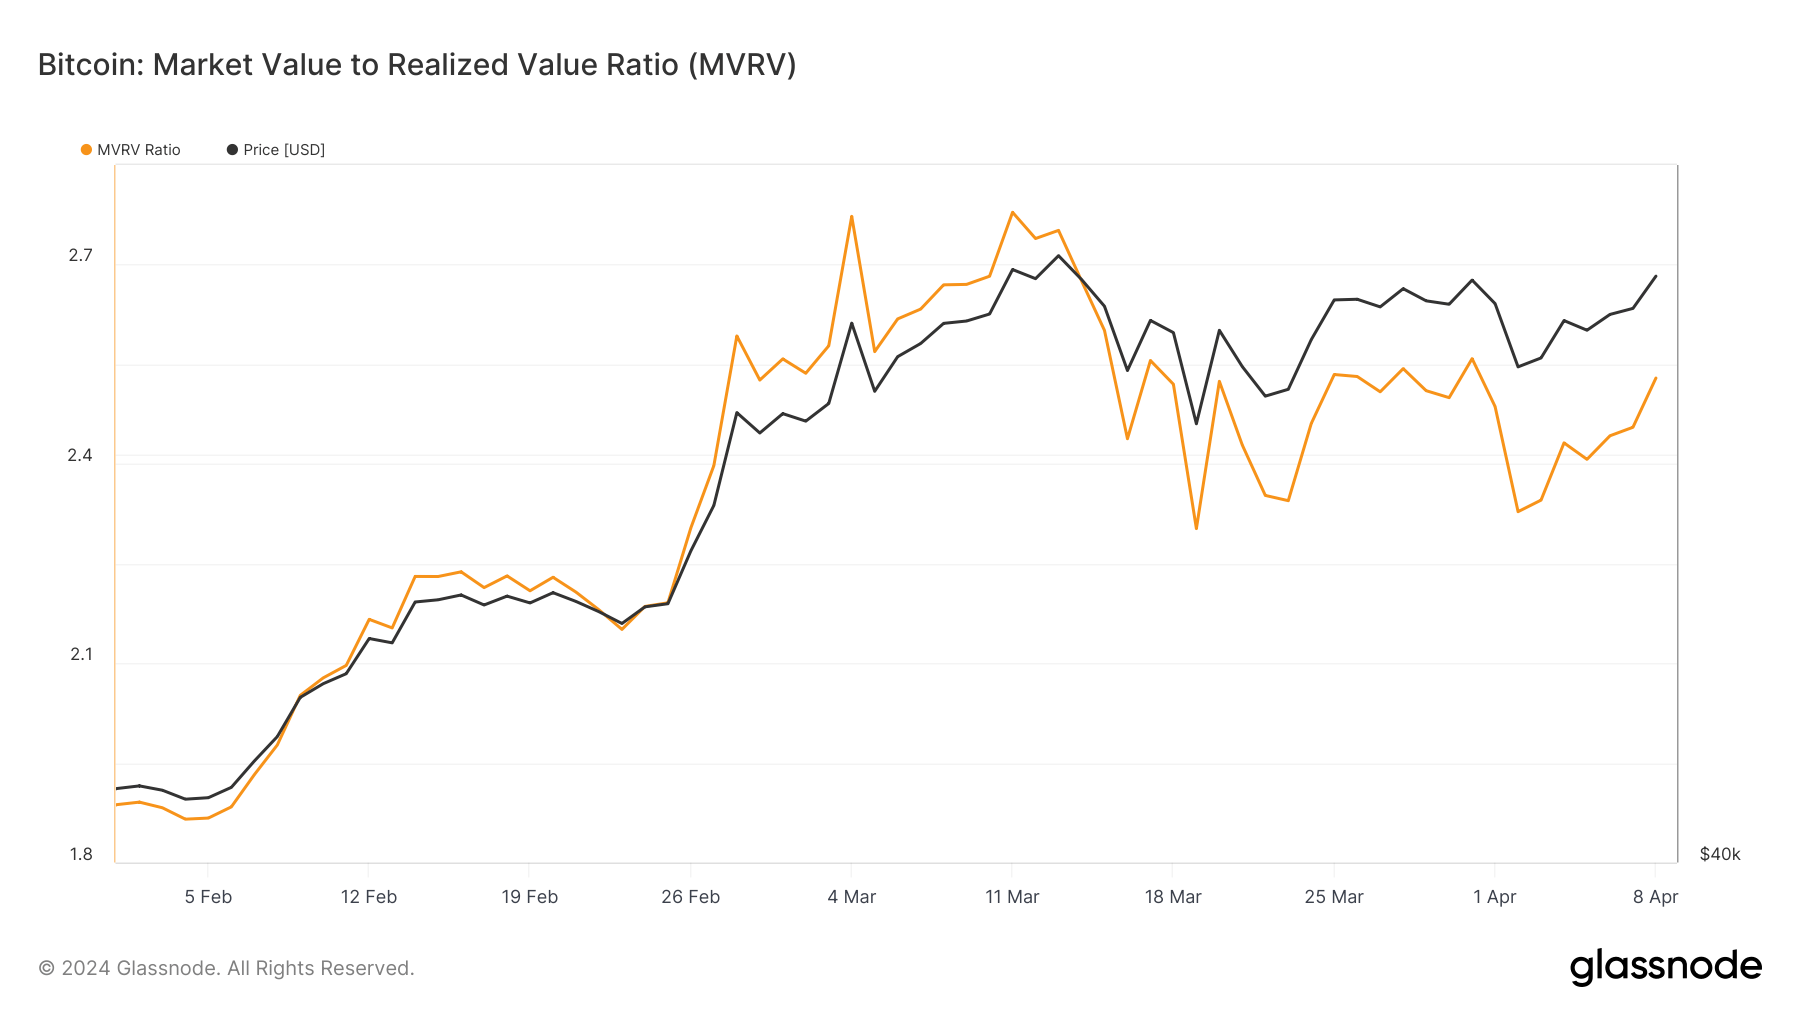 Bitcoin MVR ratio